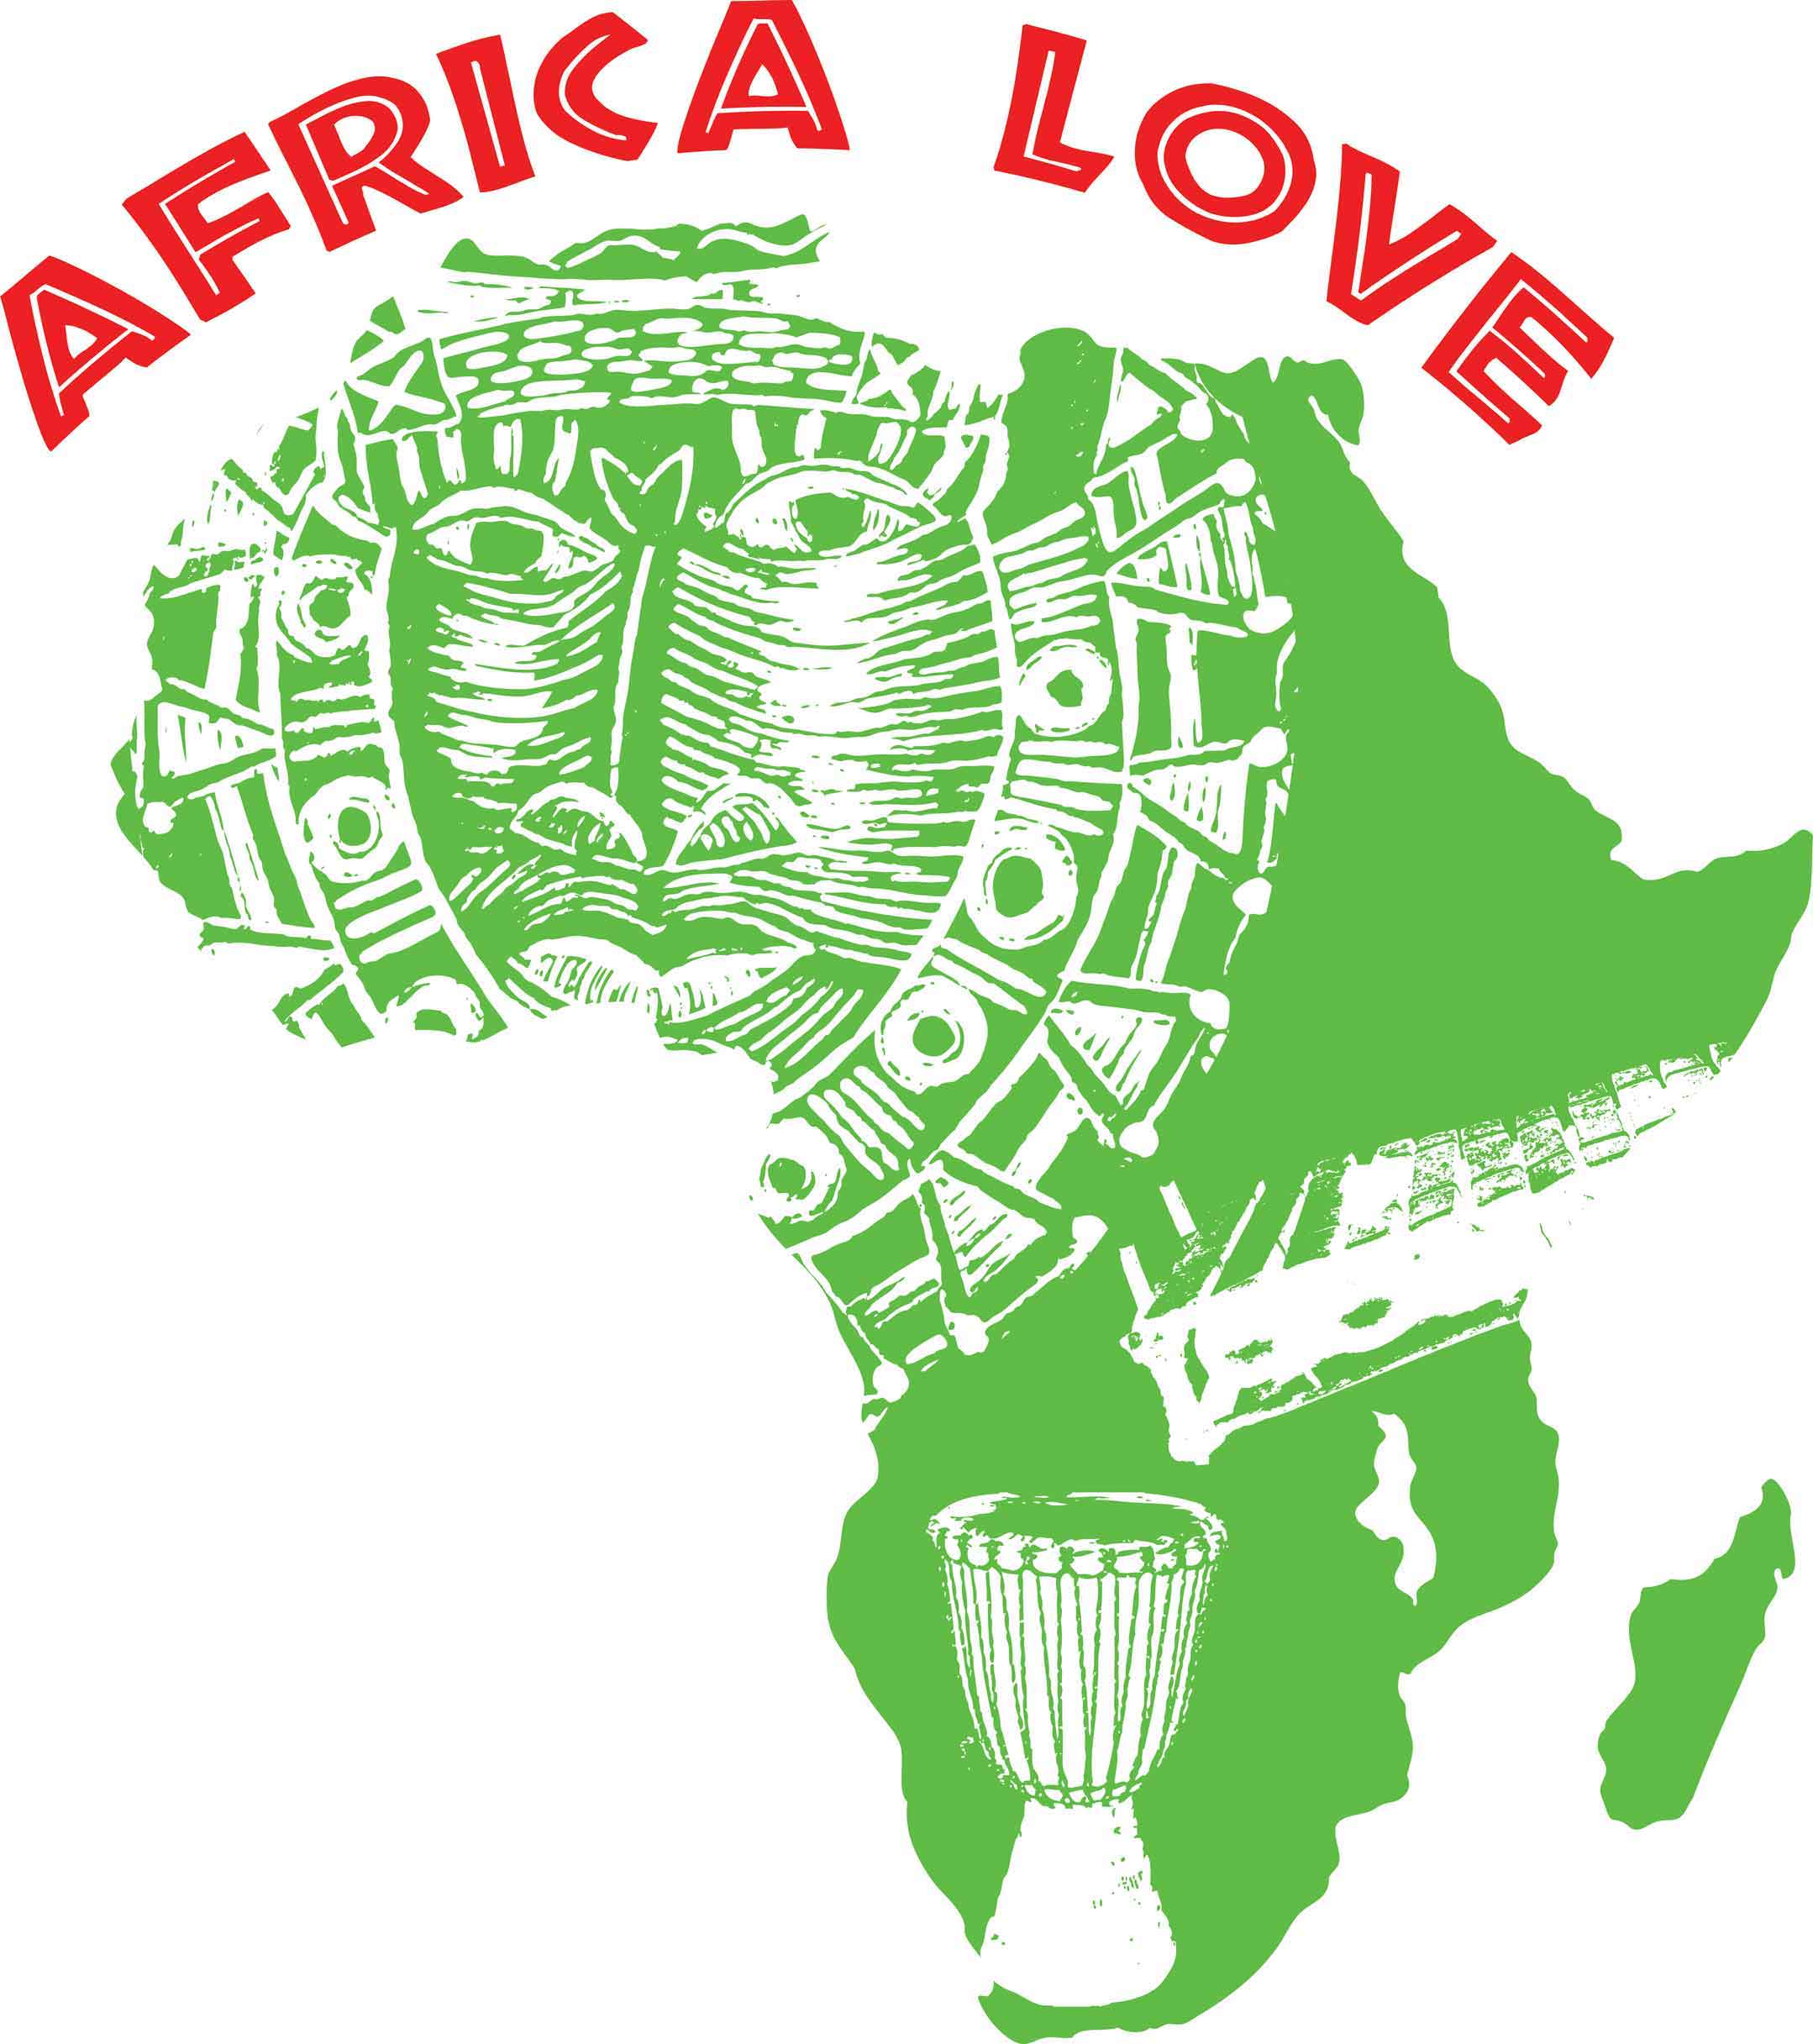 Africa Love logo